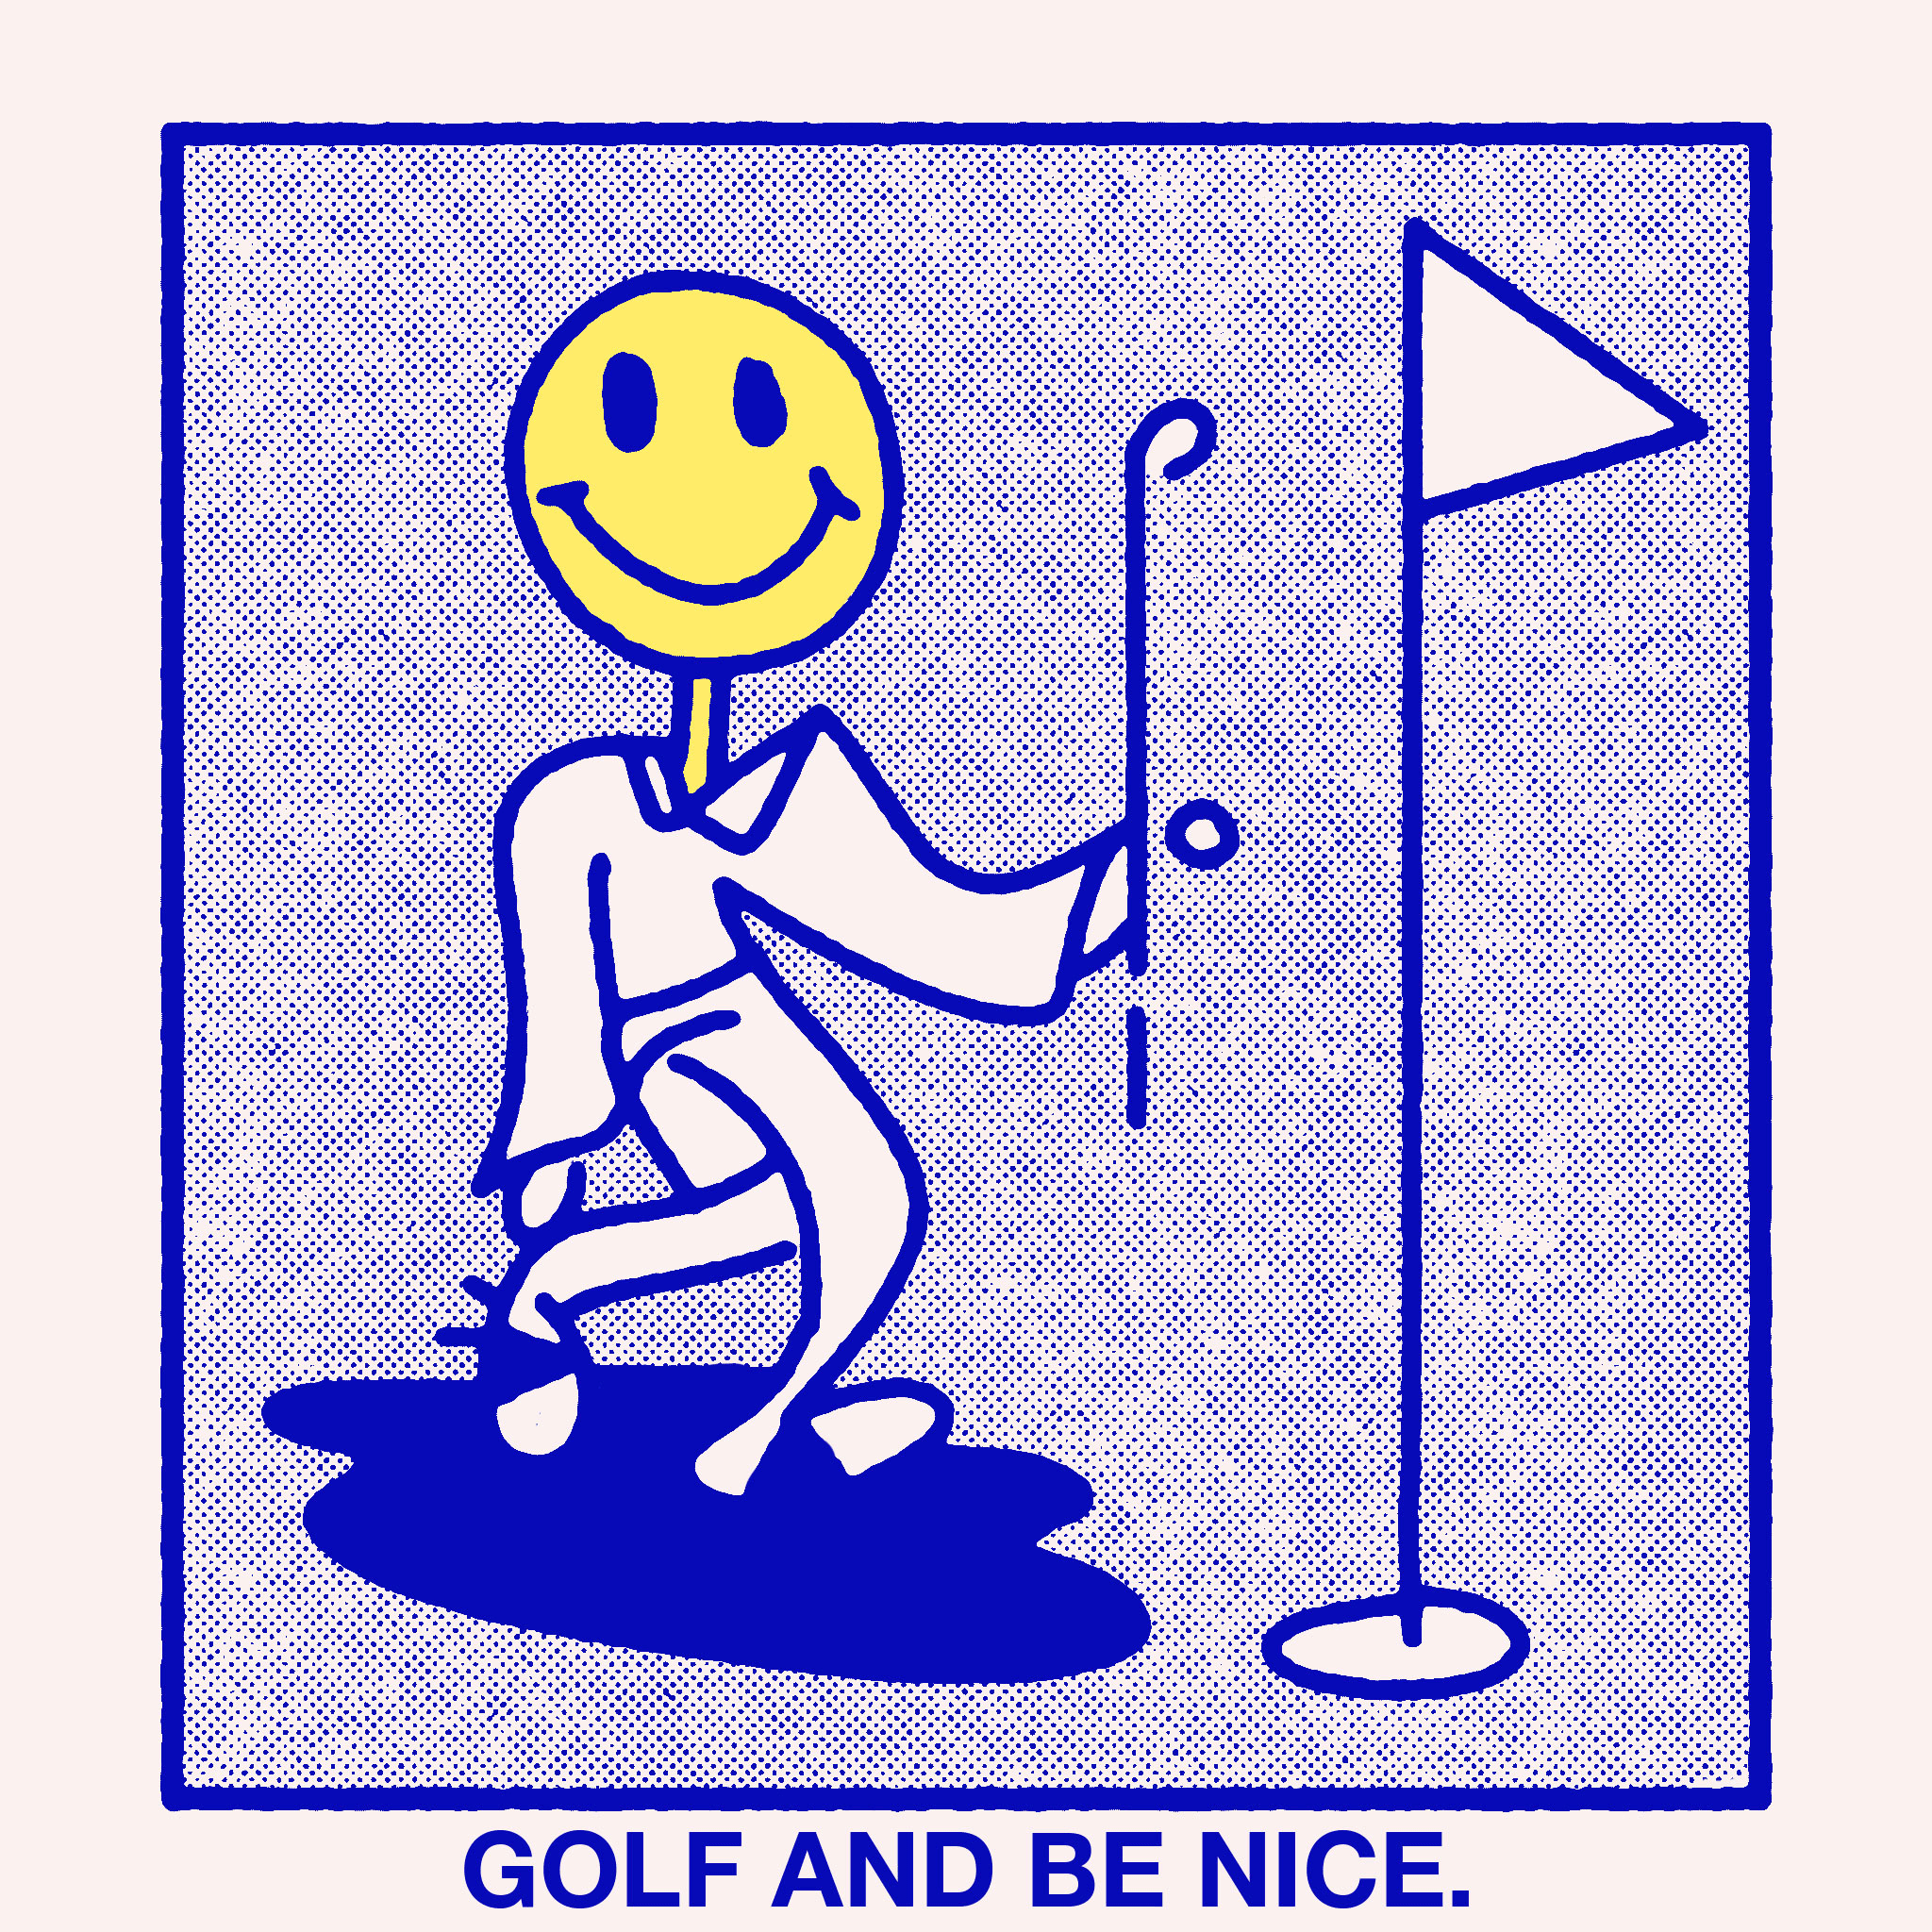 Golf And Be Nice. Smiley